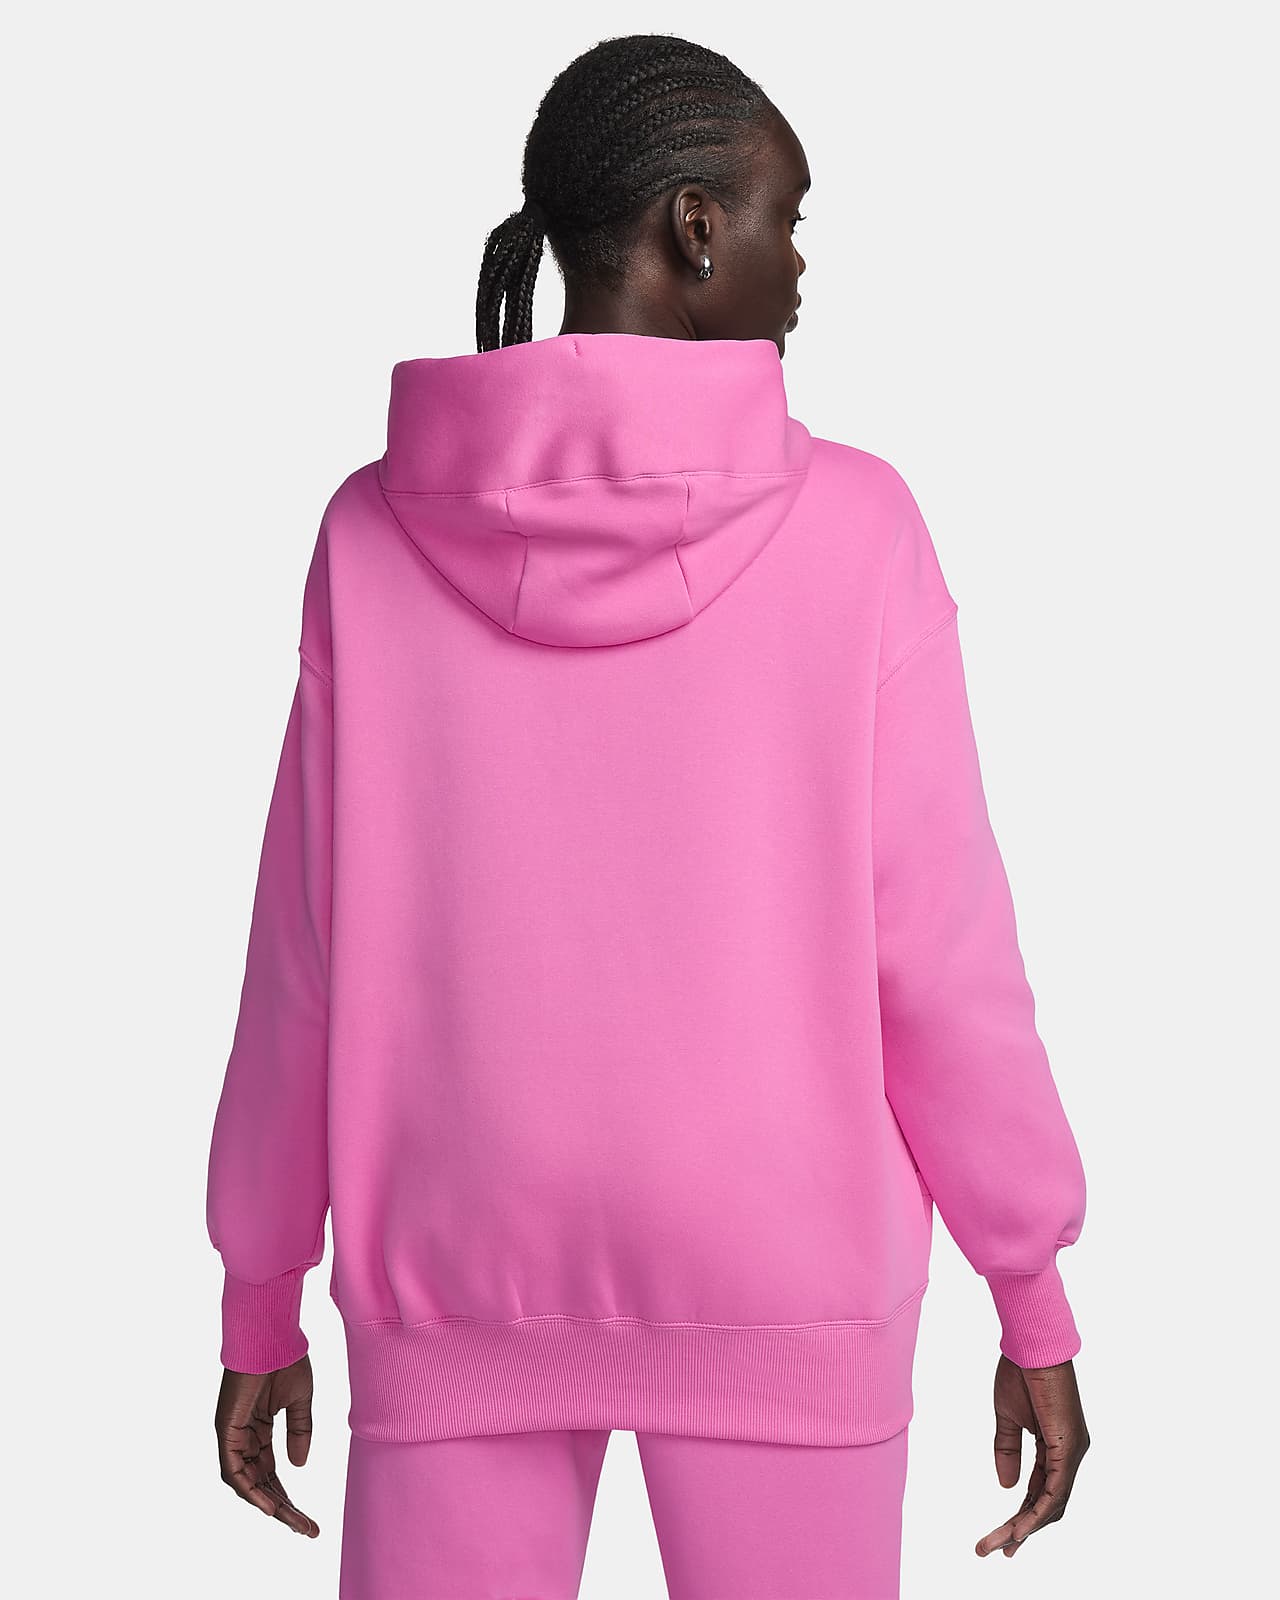 Nike Phoenix Fleece hoodie in pink